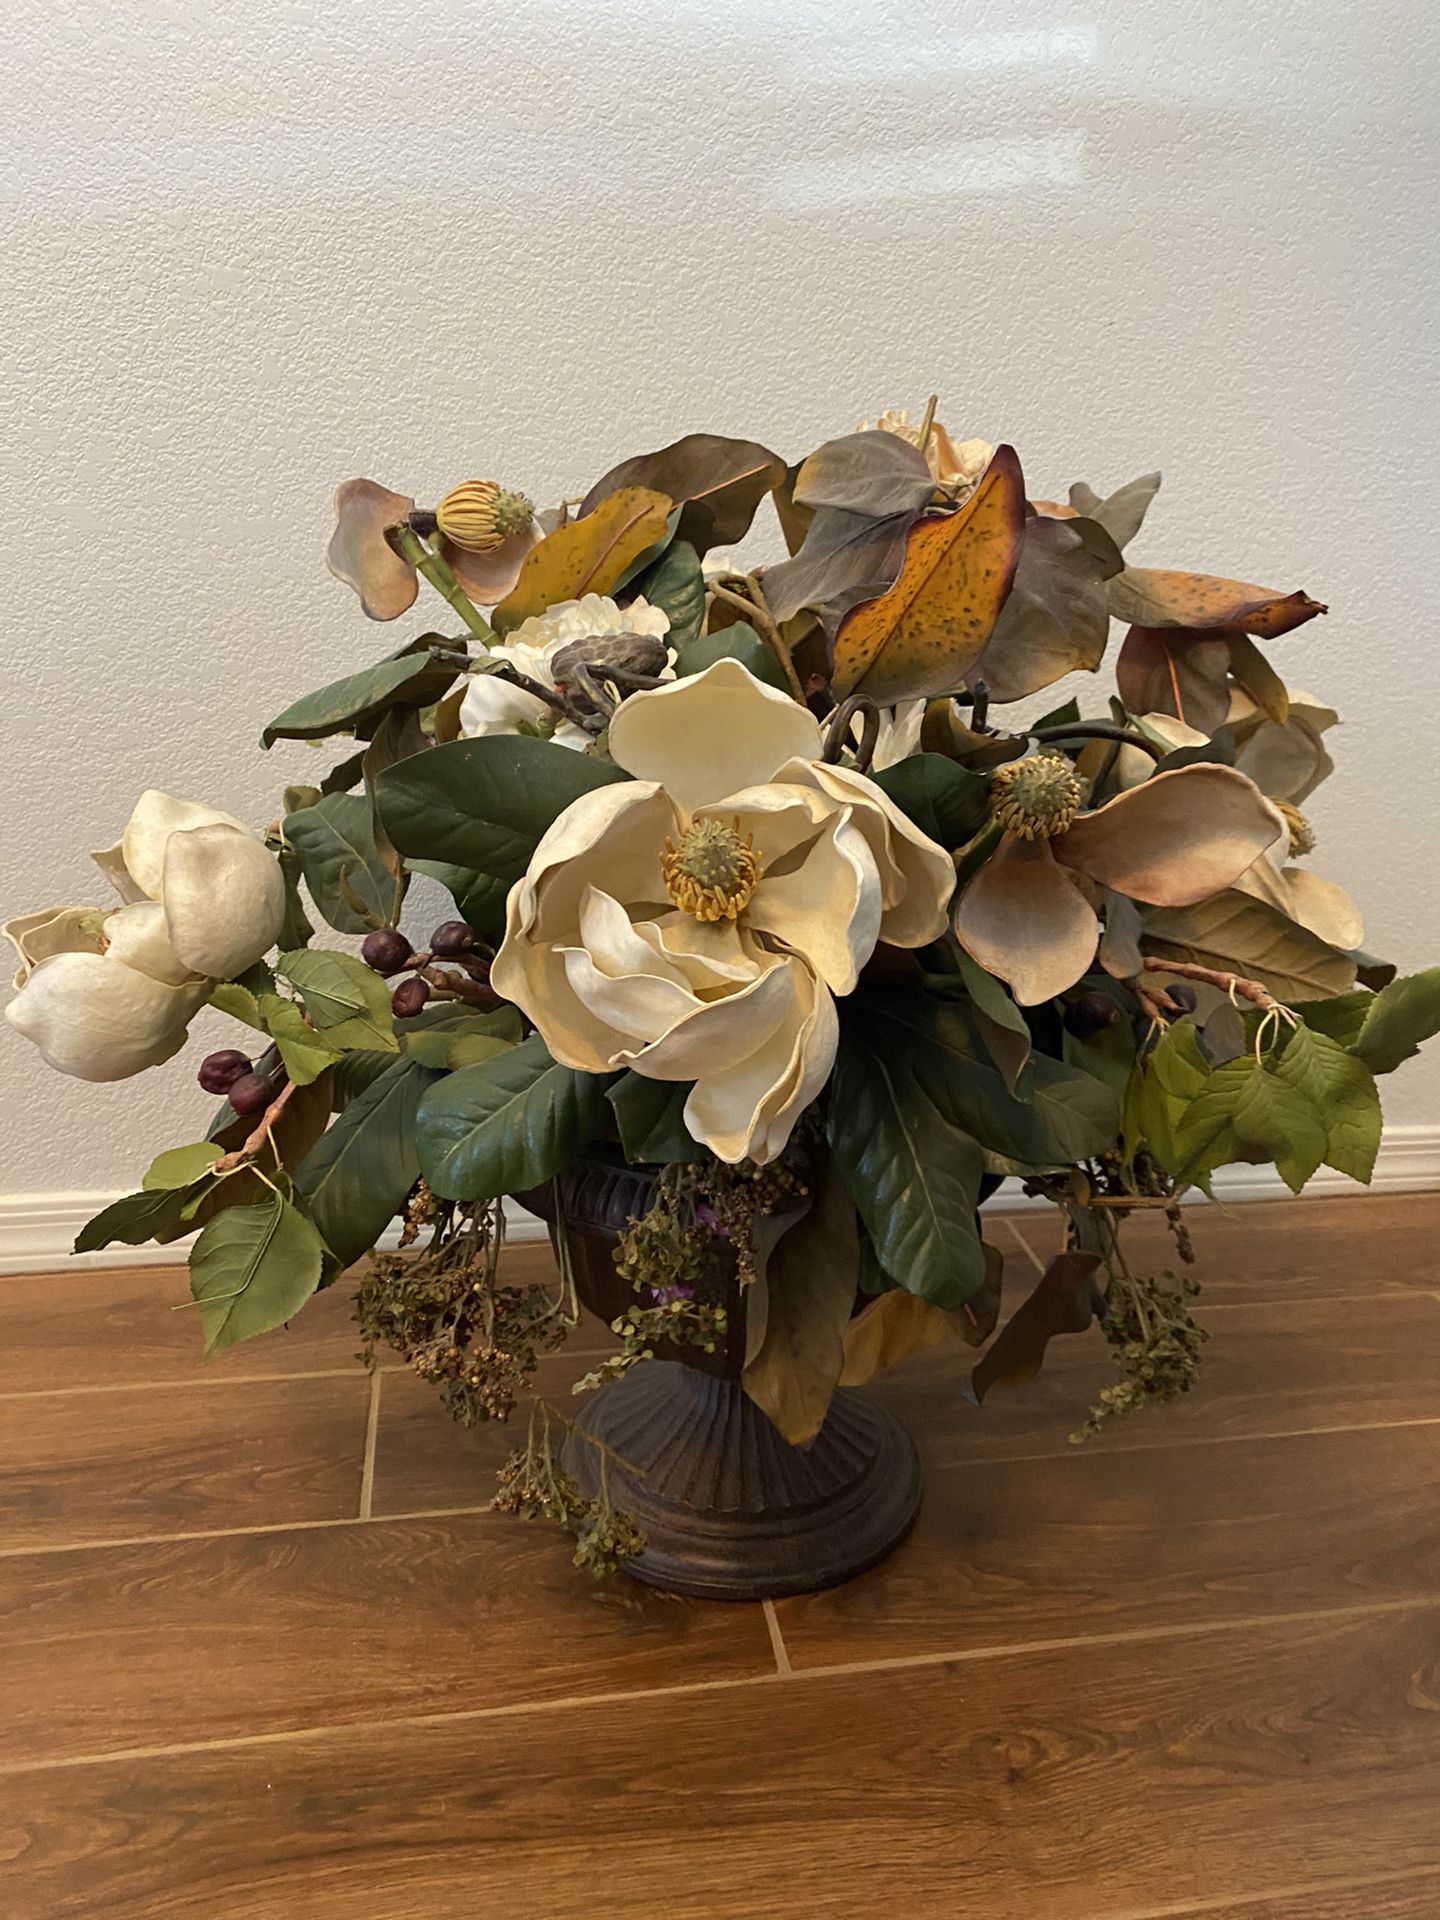 Large dried flower arrangement with vase